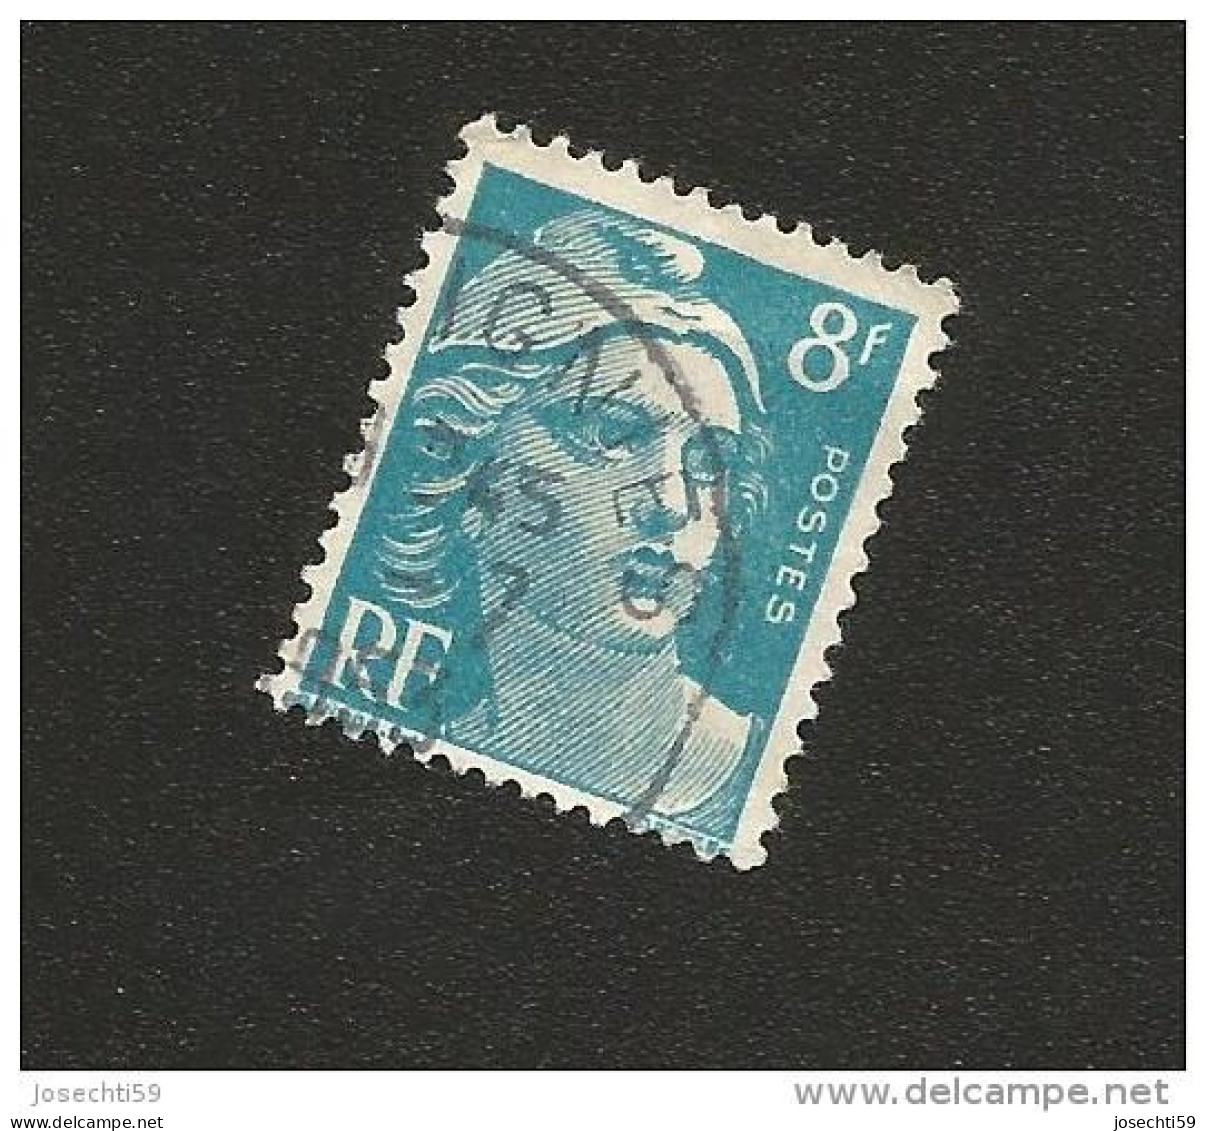 N° 810 Marianne De Gandon 8 Frs 1948 Bleu Clair  Timbre France Oblitéré - 1945-54 Marianne (Gandon)